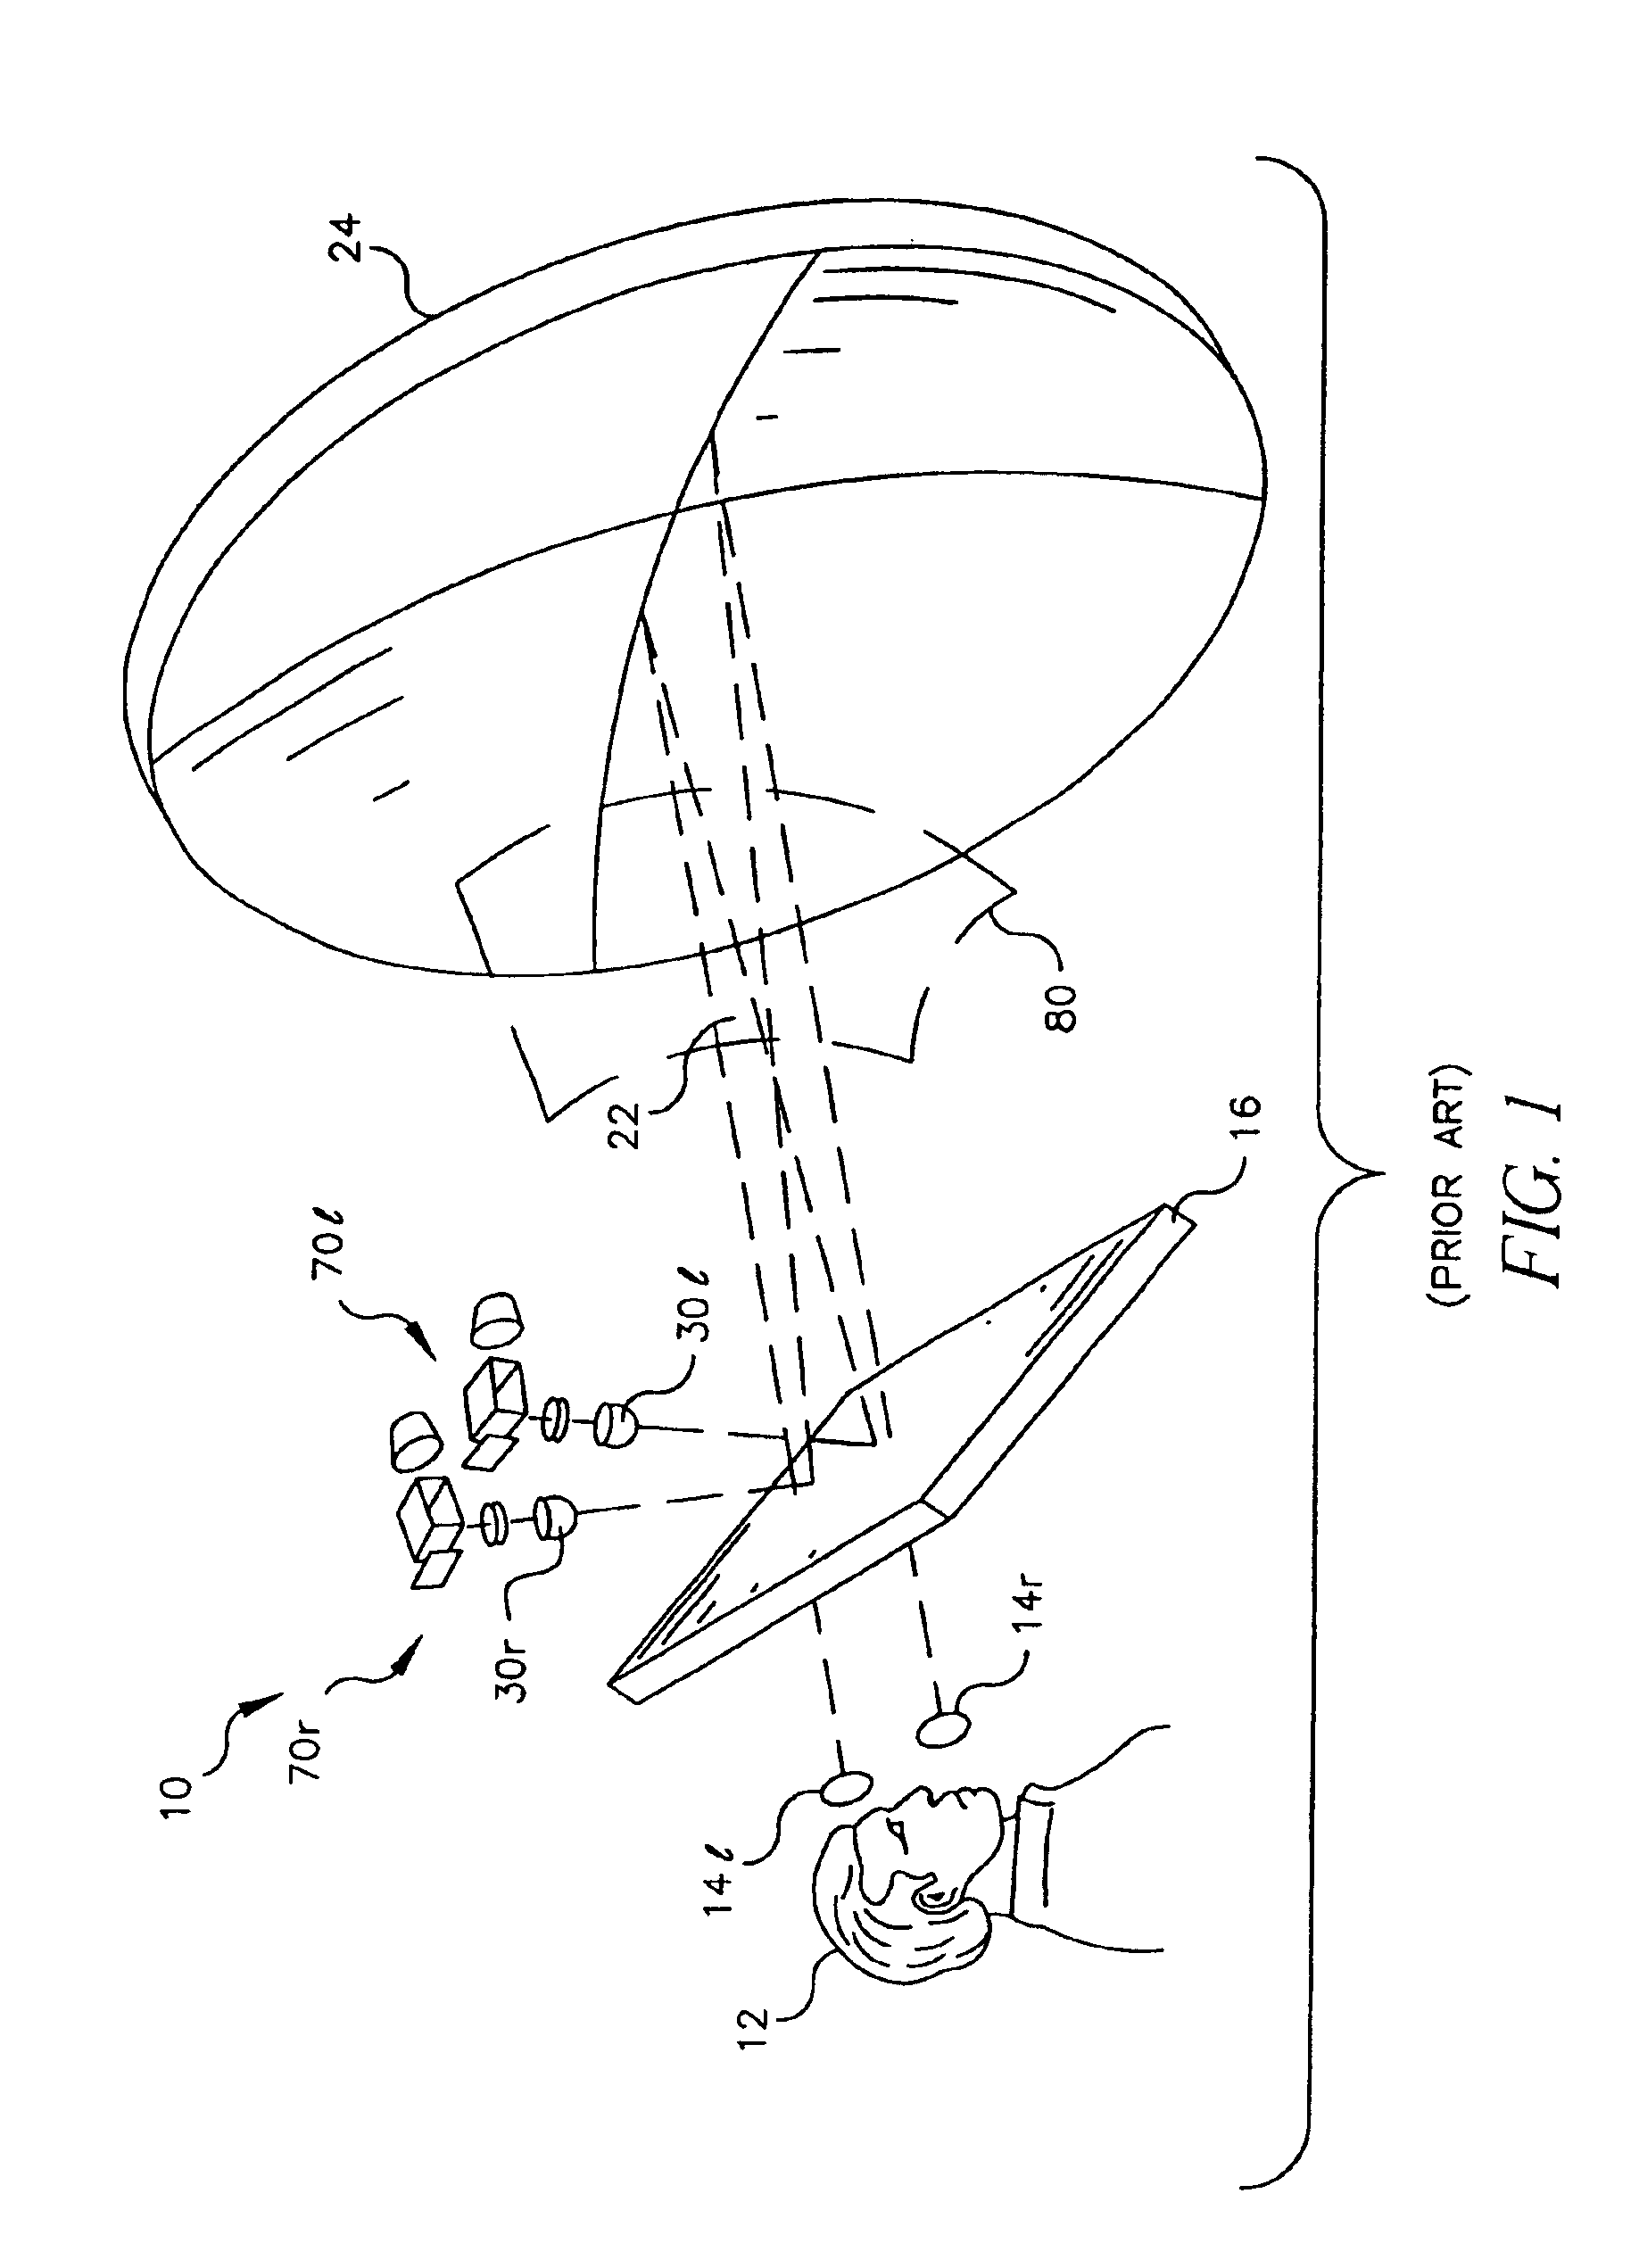 Autostereoscopic optical apparatus